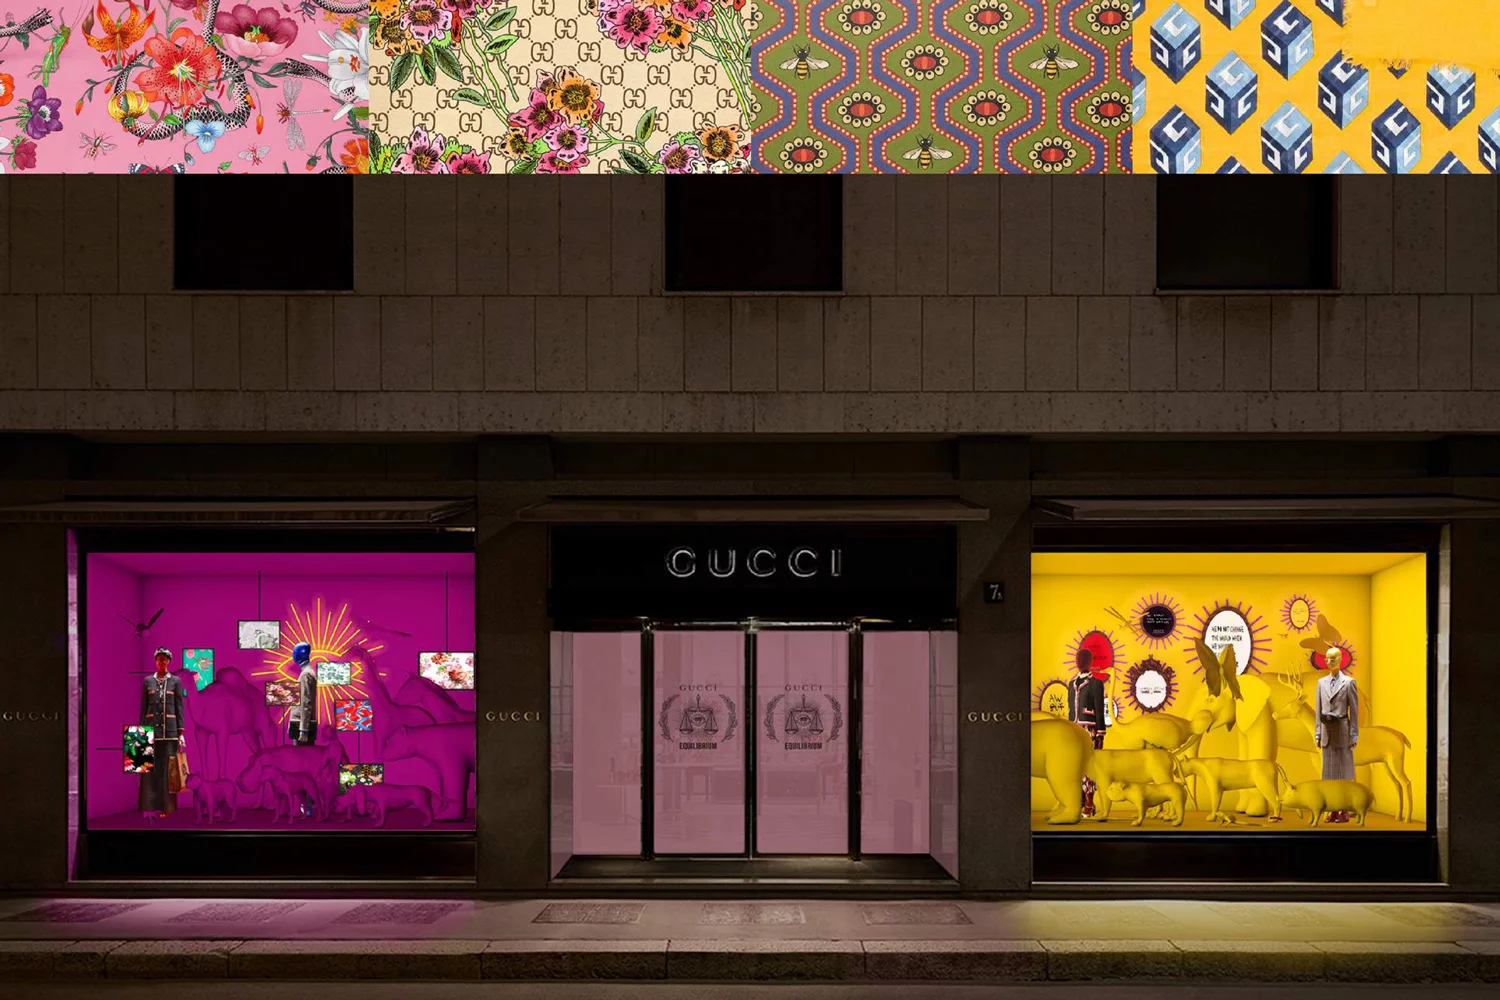 Gucci Window Display 1 by Simone SERLENGA